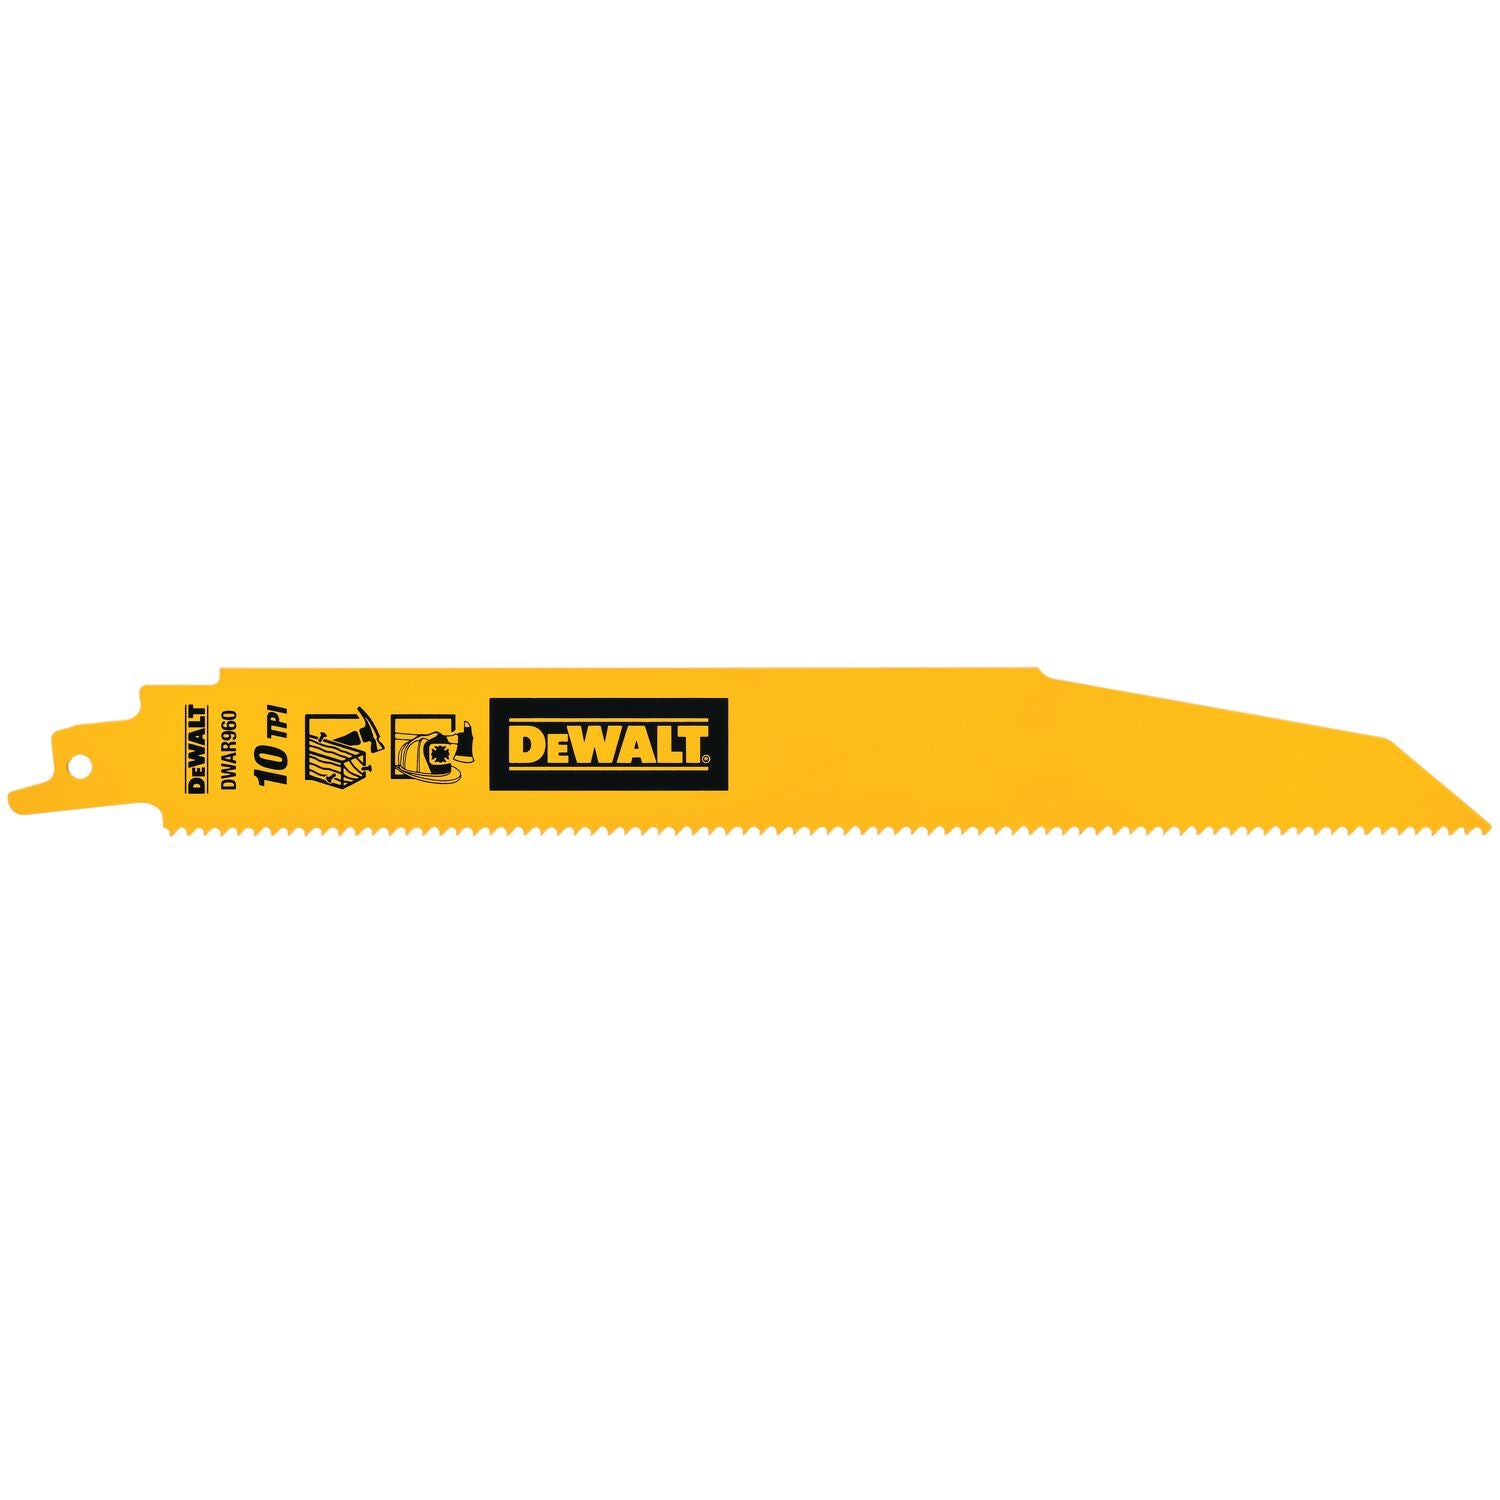 DEWALT DWAR960 9-in 10 TPI Bi-Metal Reciprocating Saw Blades for Wood, Metal, Drywall, 5-pk